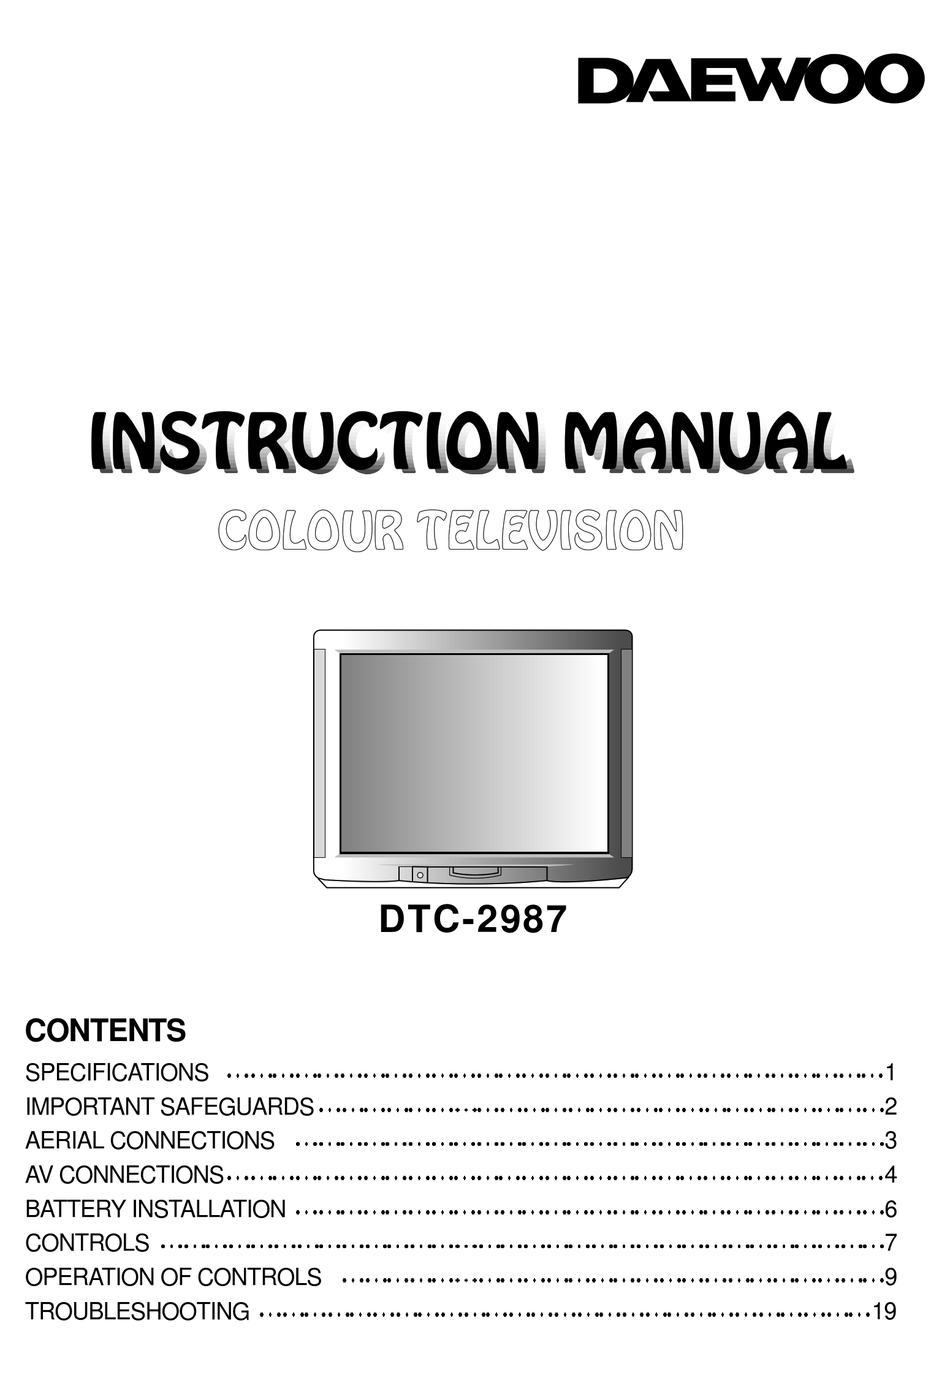 DAEWOO DTC-2987 INSTRUCTION MANUAL Pdf Download | ManualsLib